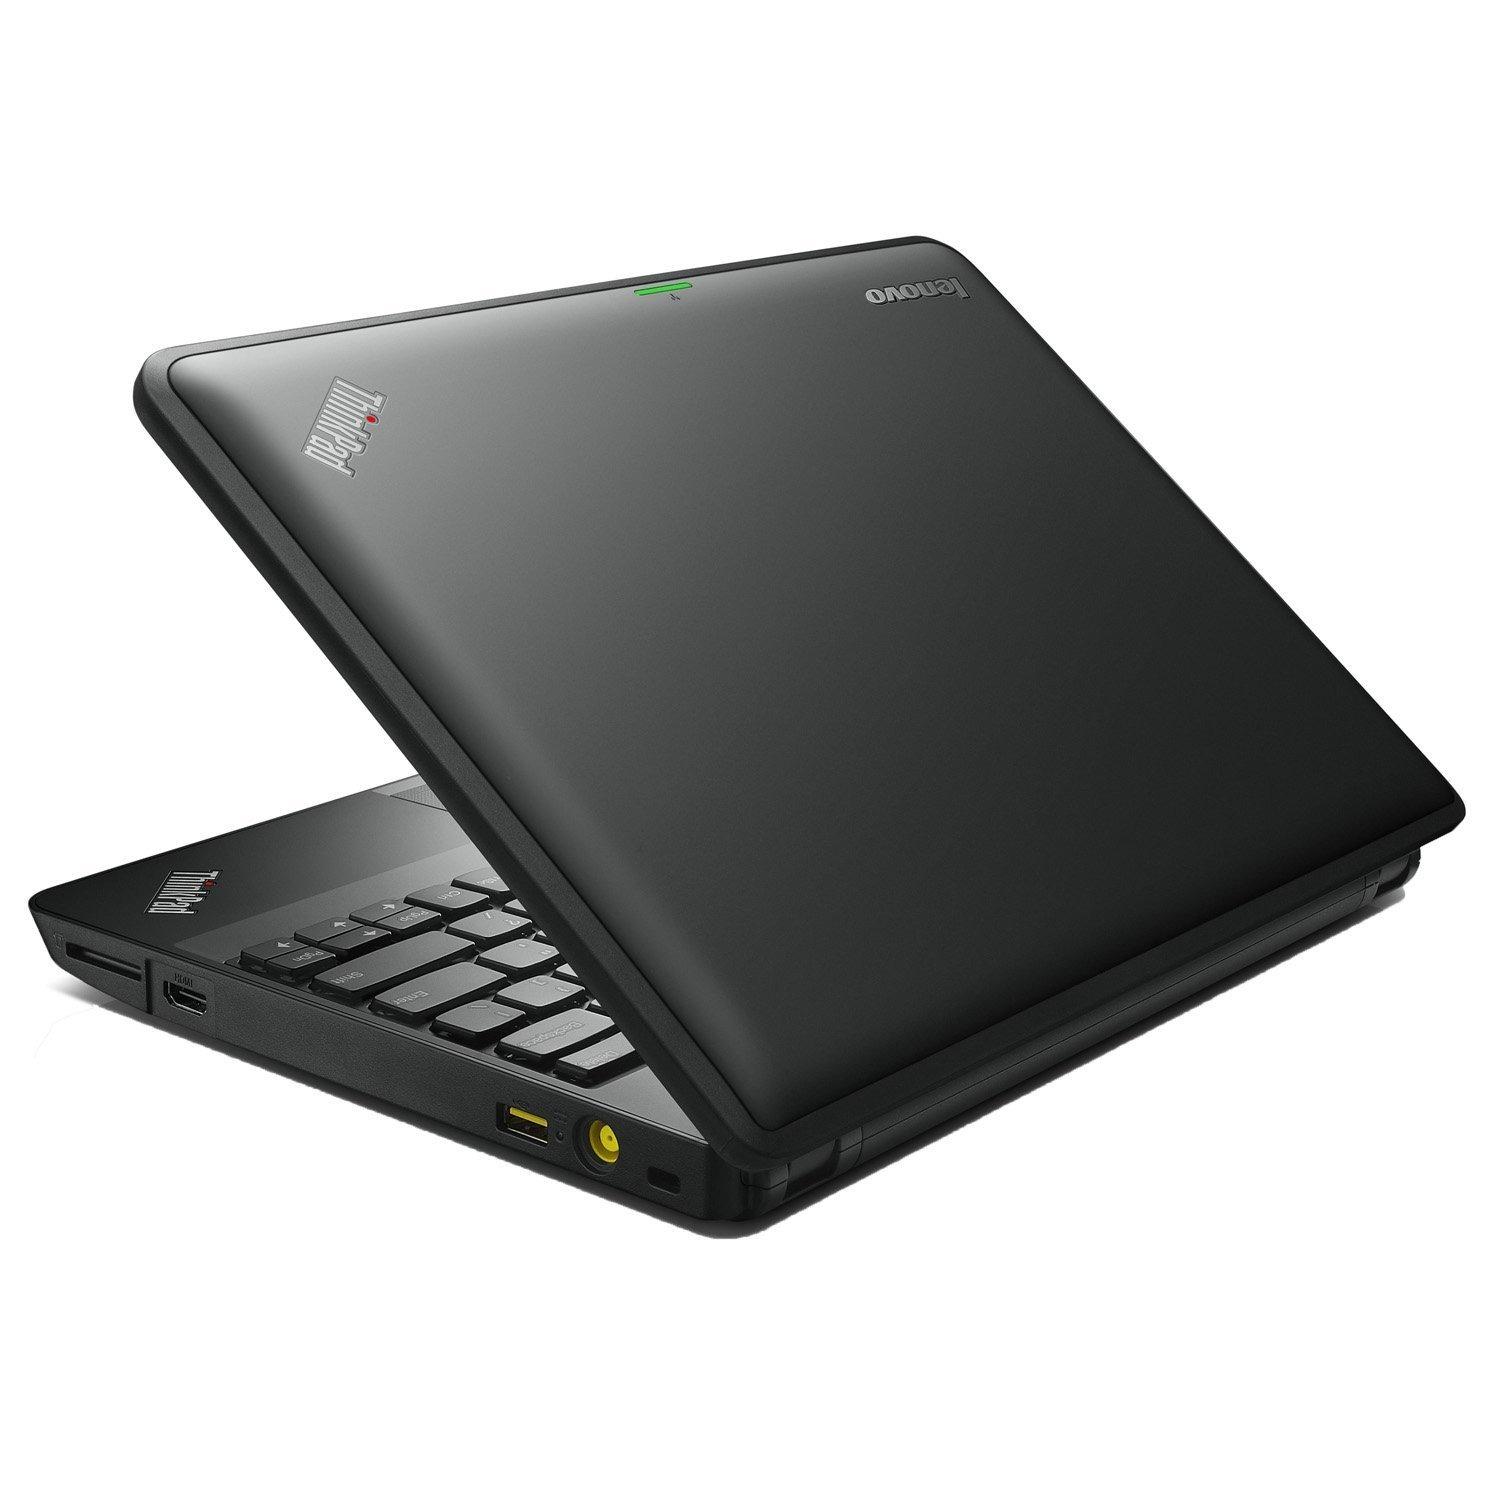 Lenovo Thinkpad X131E Chromebook (A Grade Used machine)